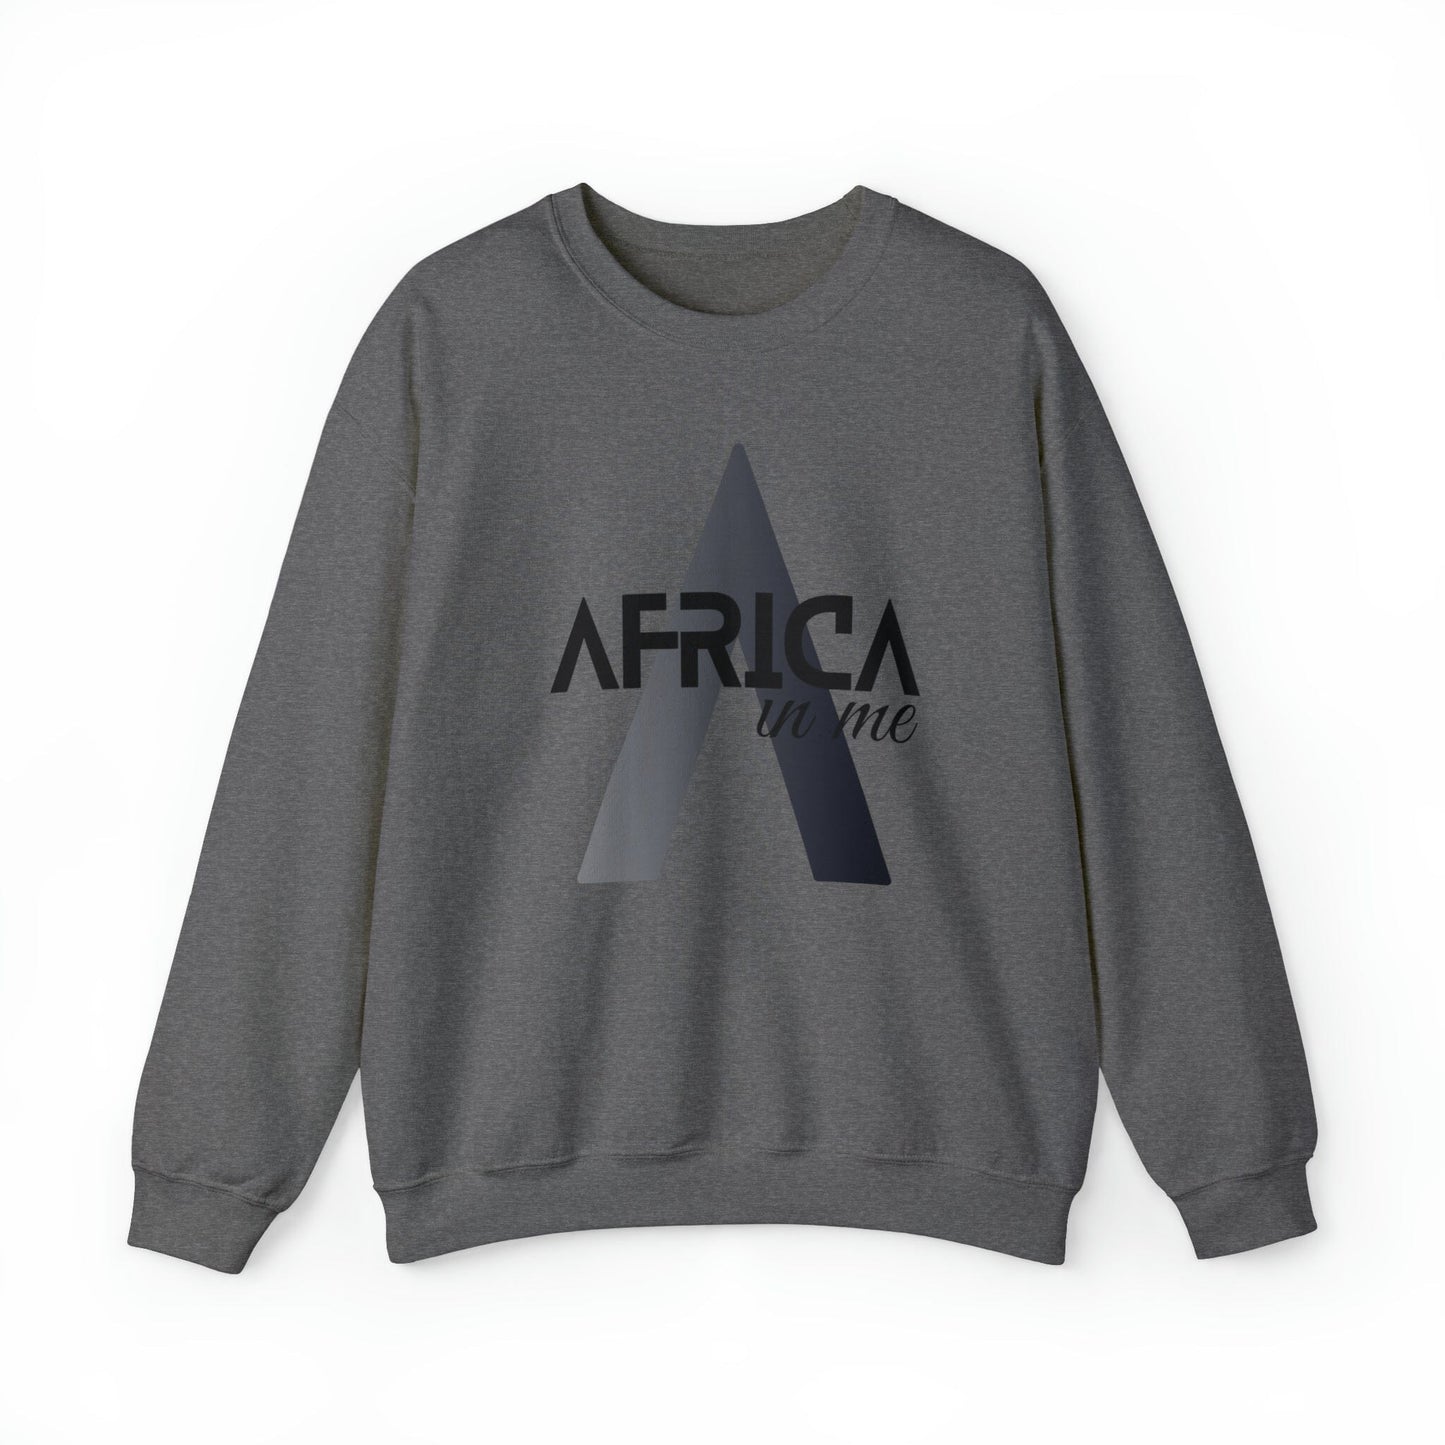 Black History Sweatshirts Superhero Africa in Me Sweatshirt Printify S Graphite Heather 